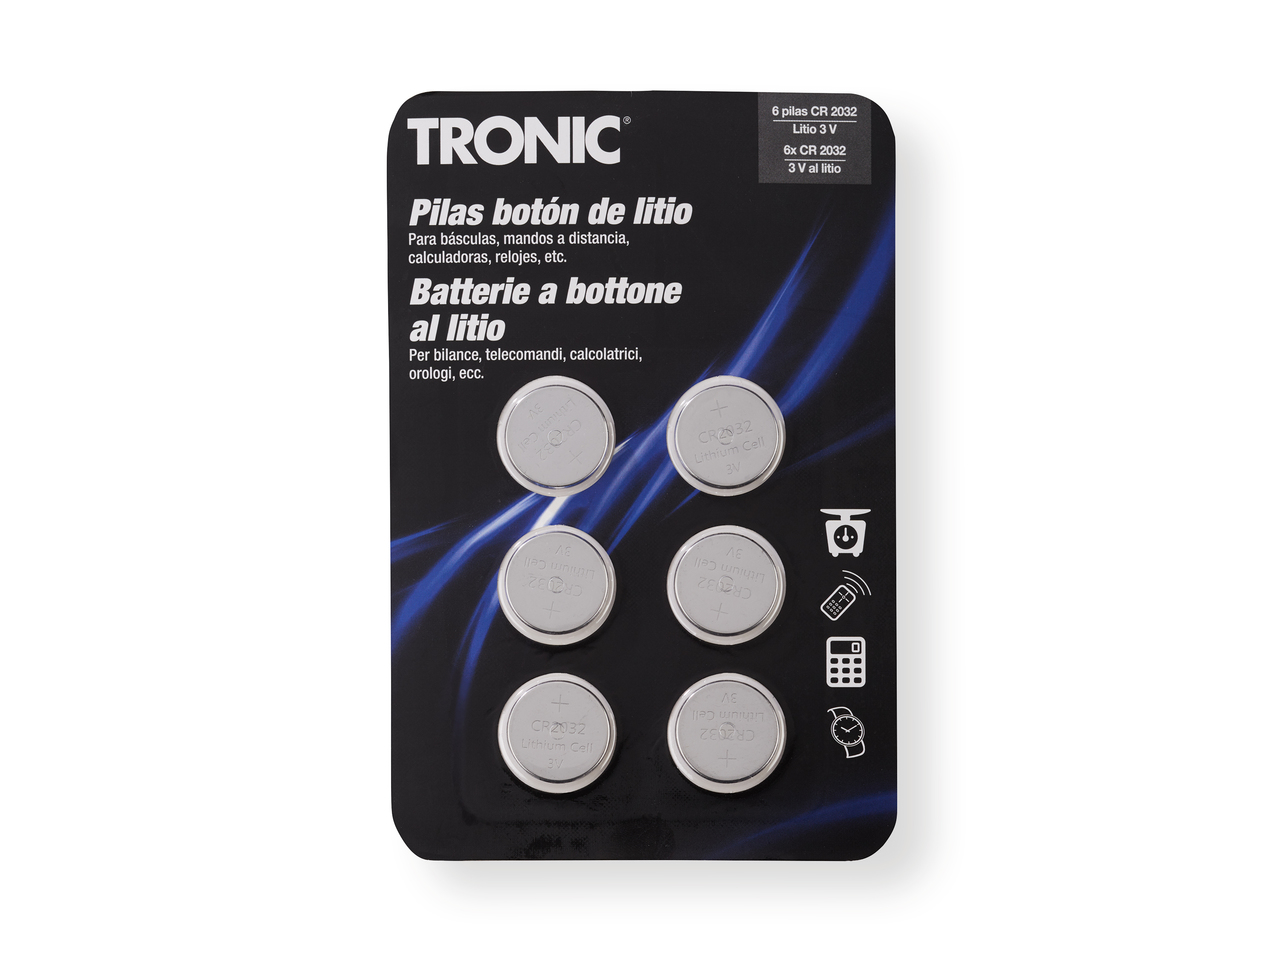 "TRONIC" Pilas de botón